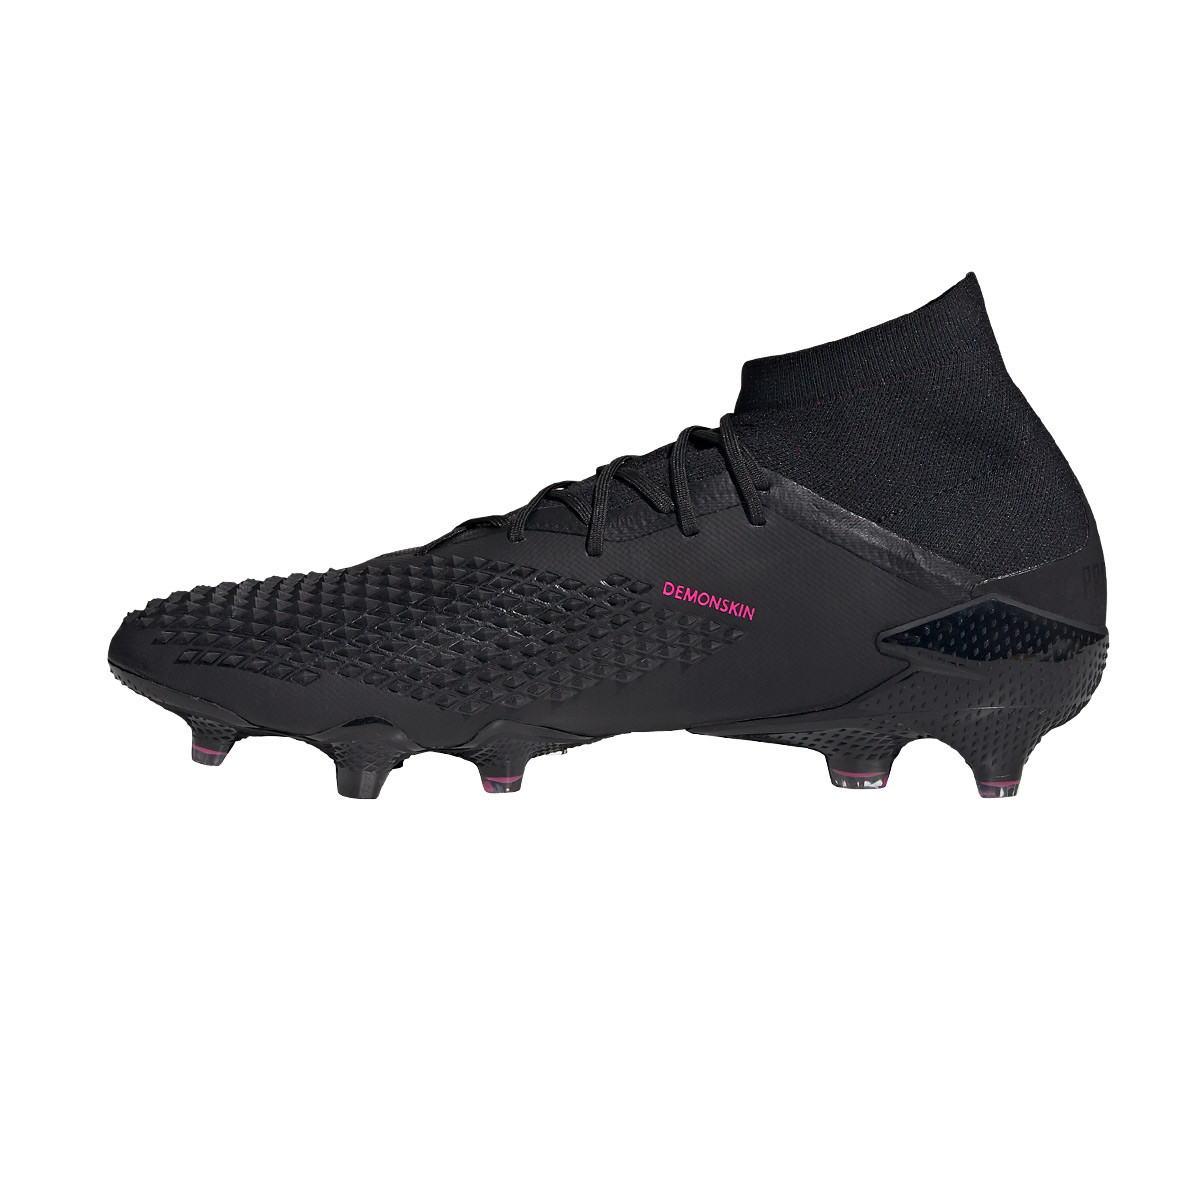 Adidas Predator 20.3 Laceless Turf Boots Black adidas UK